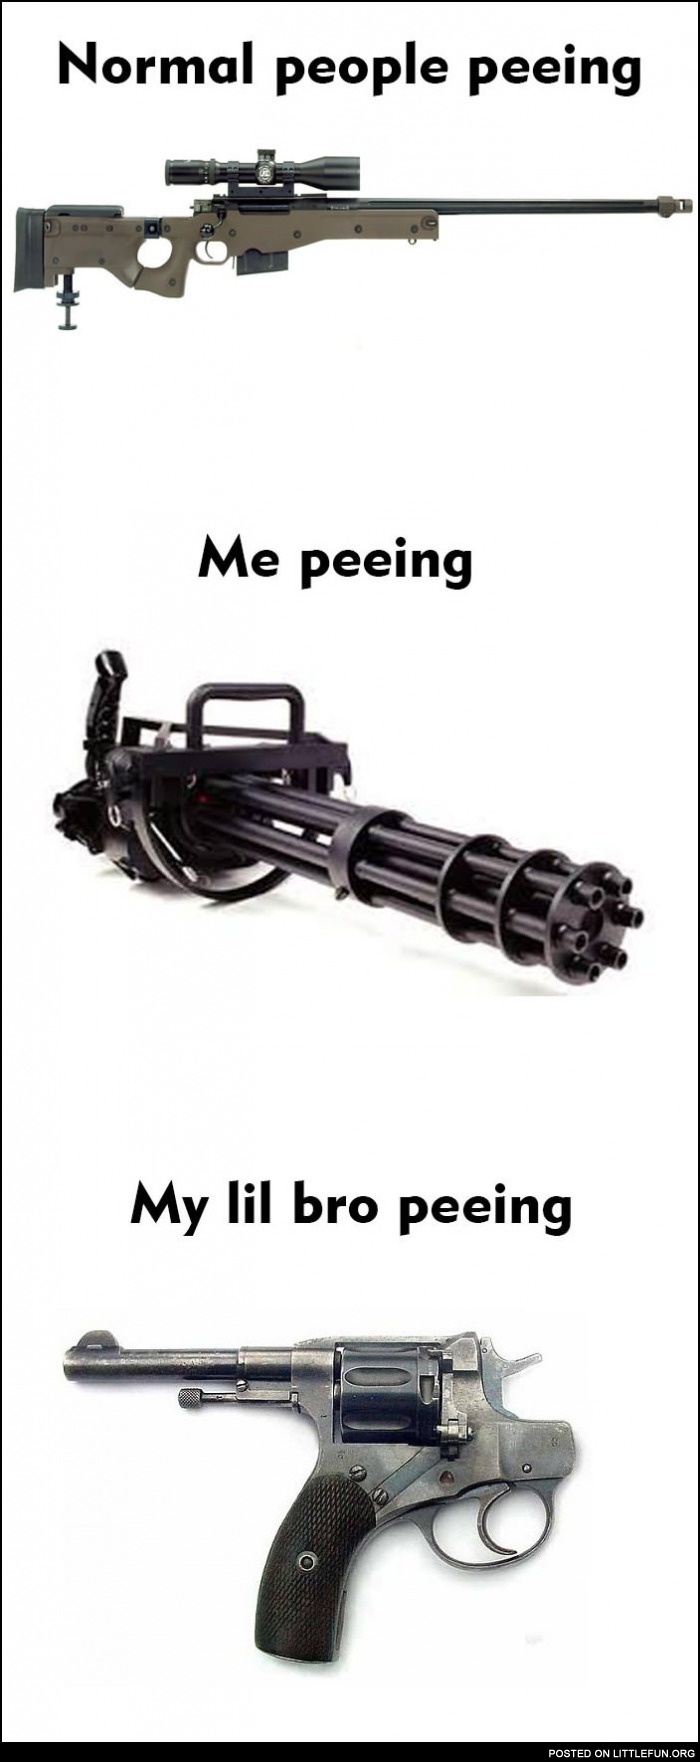 How my lil bro peeing